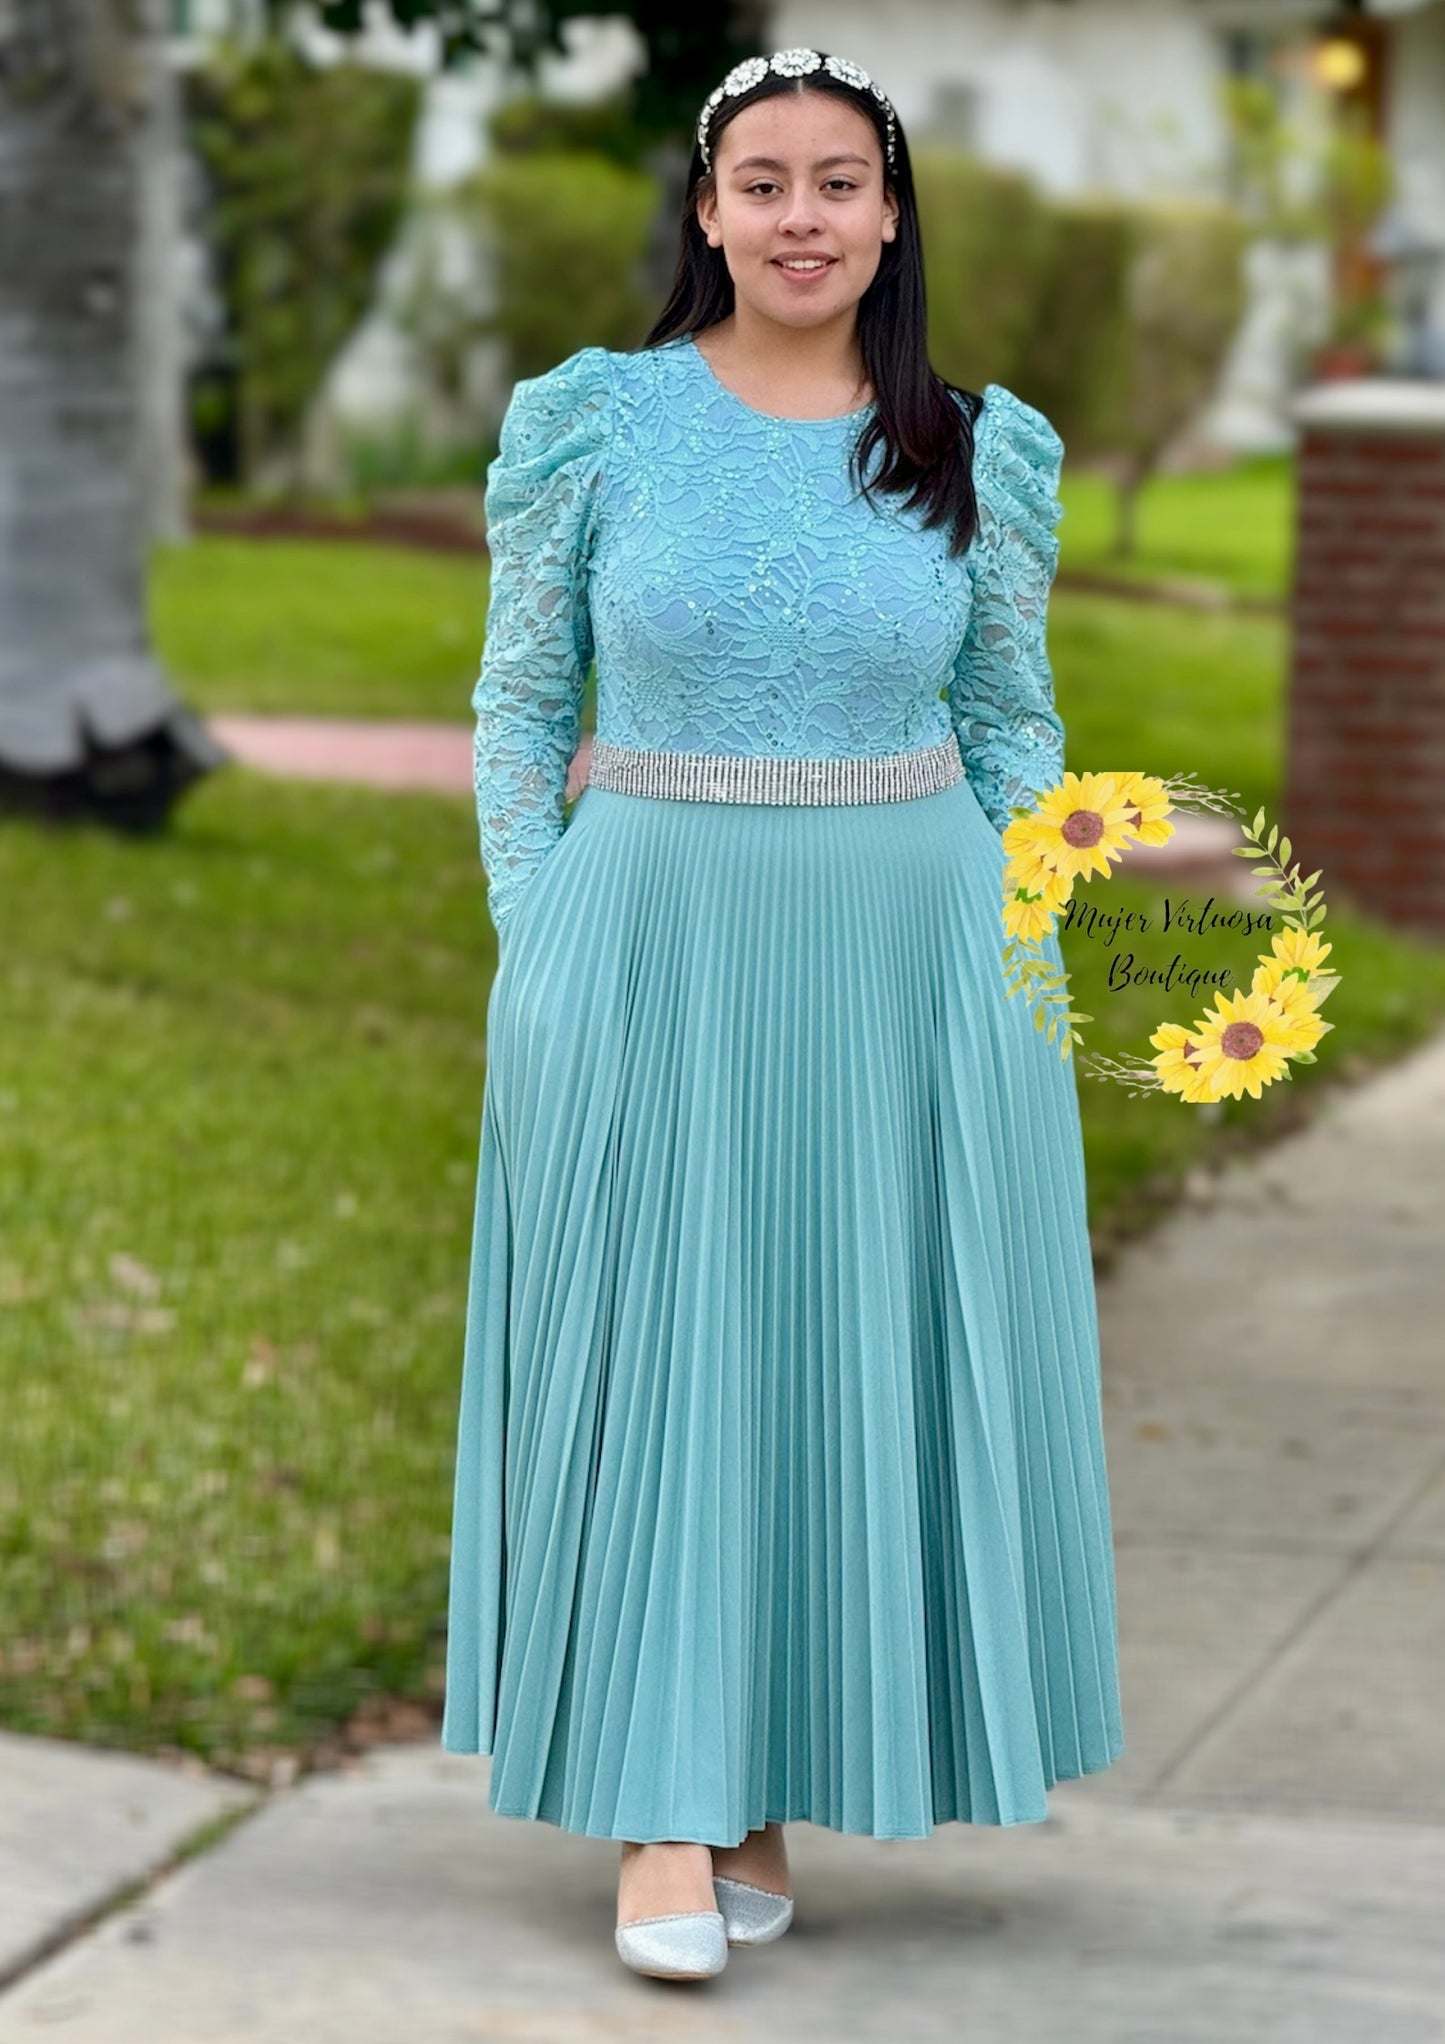 Ophelia Aqua Pleated Lace Dress